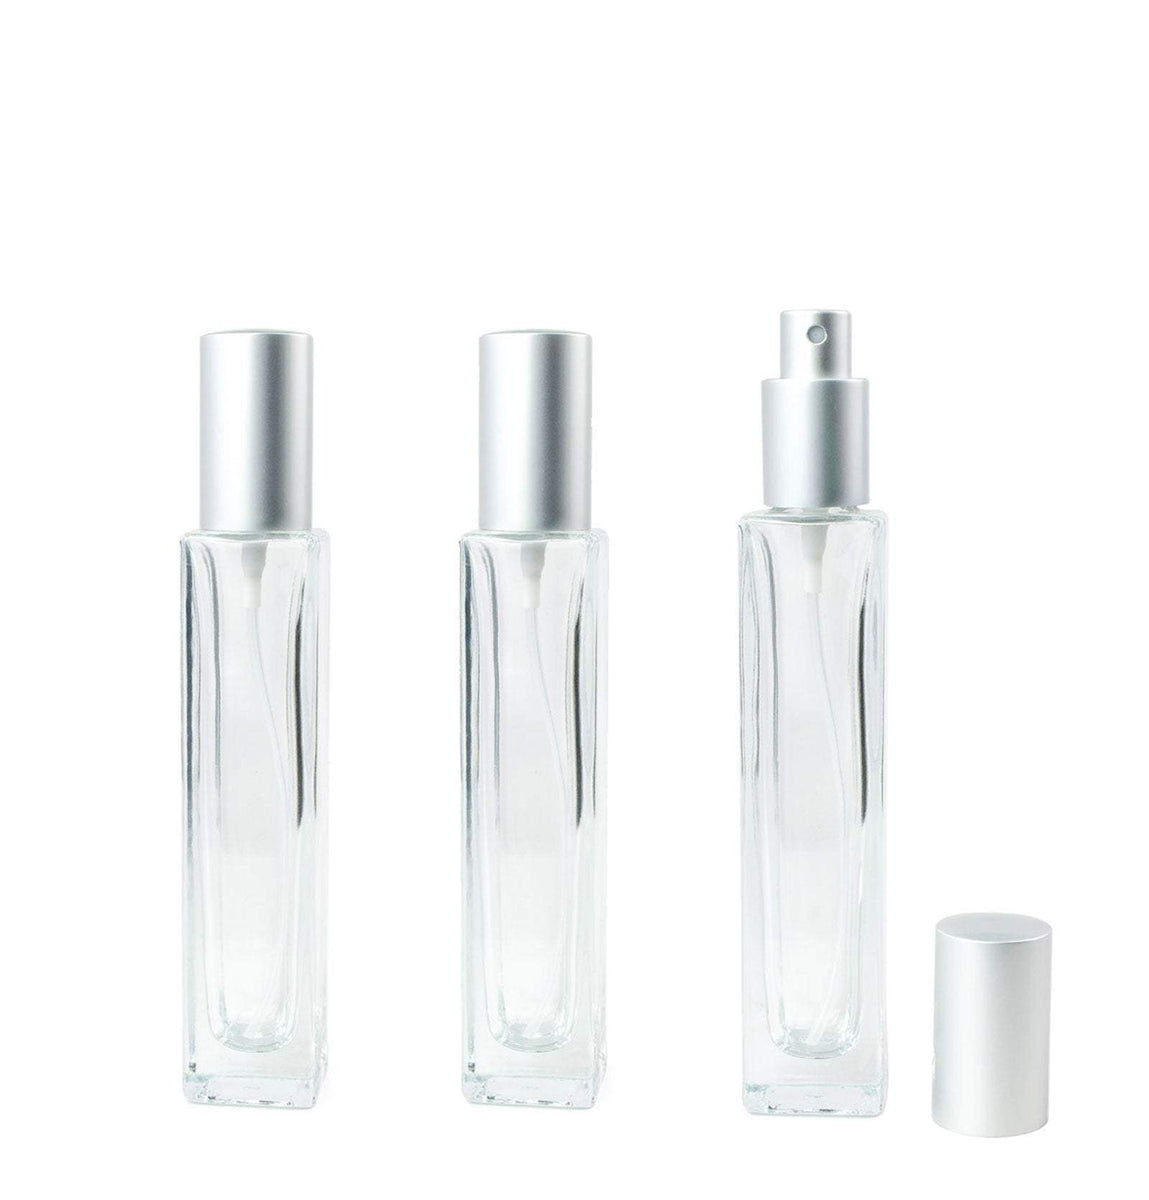 AZAGURY 1.7 oz. White Crystal Perfume Spray